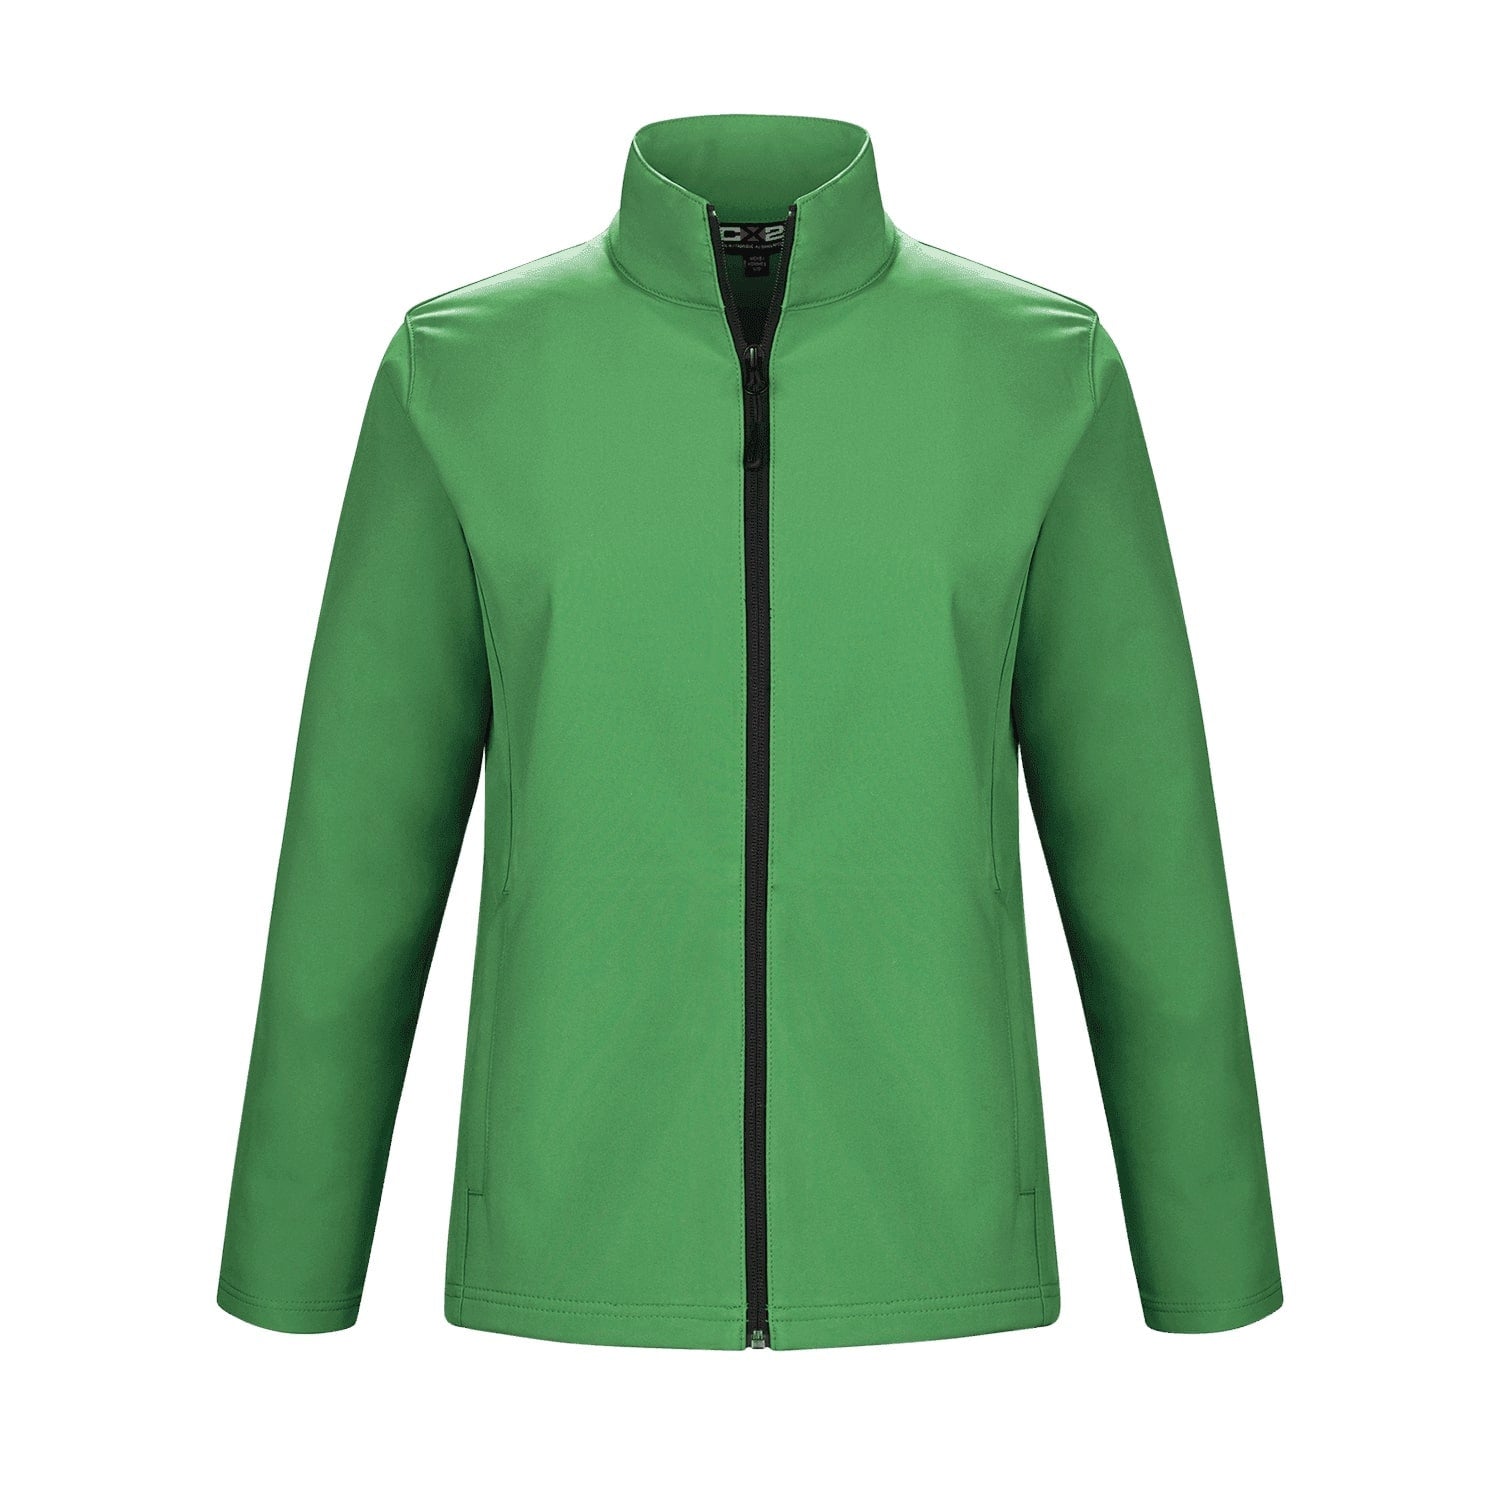 L07241 - Cadet Ladies Lightweight Softshell Jacket Green